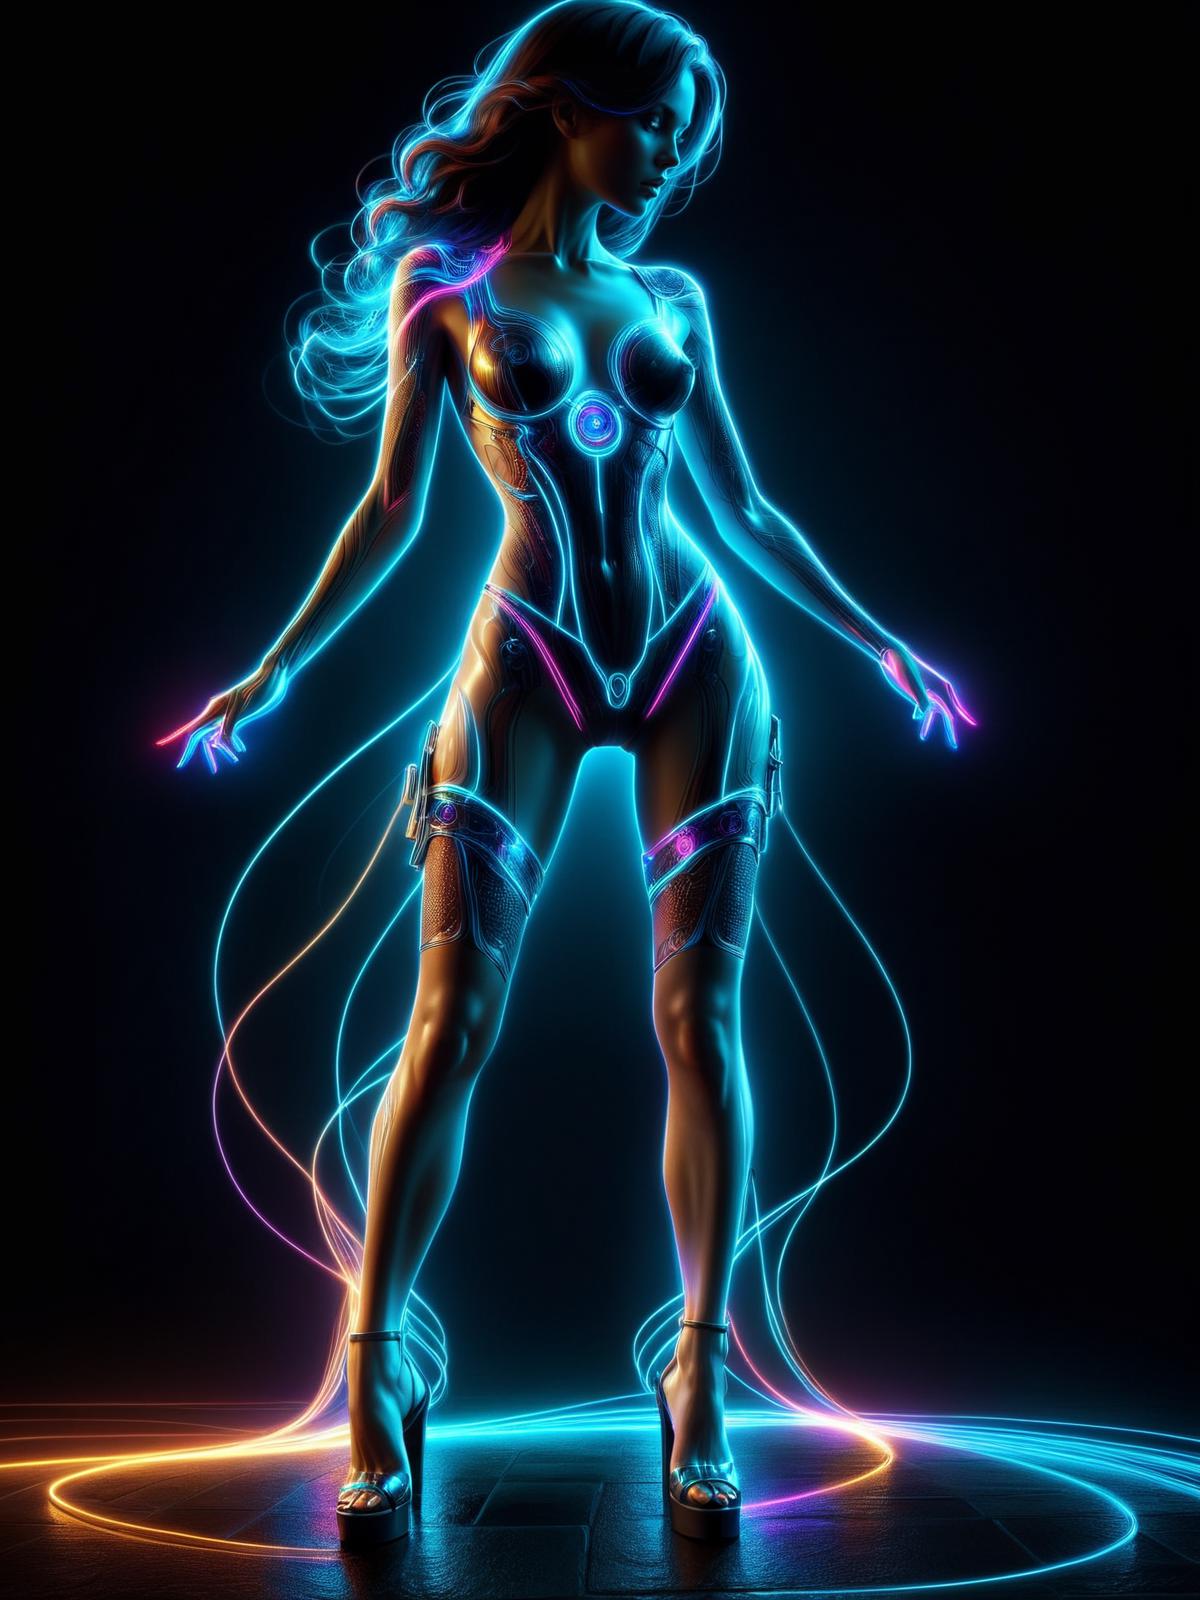 Neon Cyberpunk SDXL image by maDcaDDie